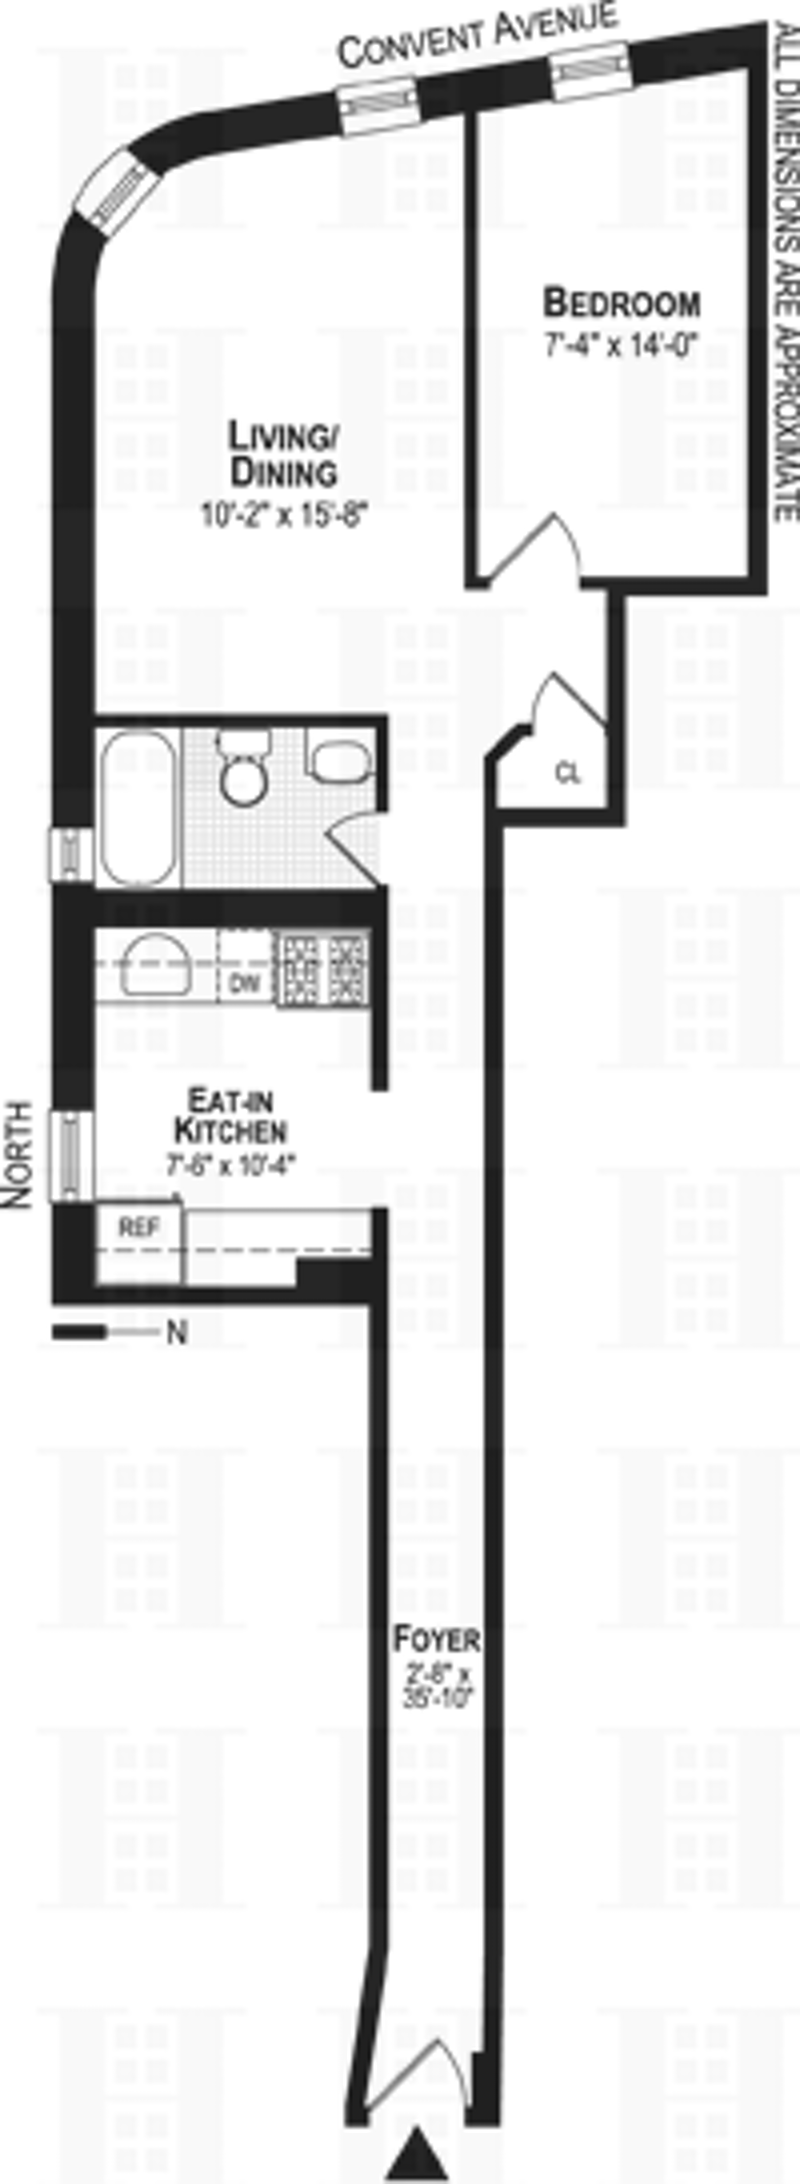 Floorplan for 100 Convent Avenue, 507